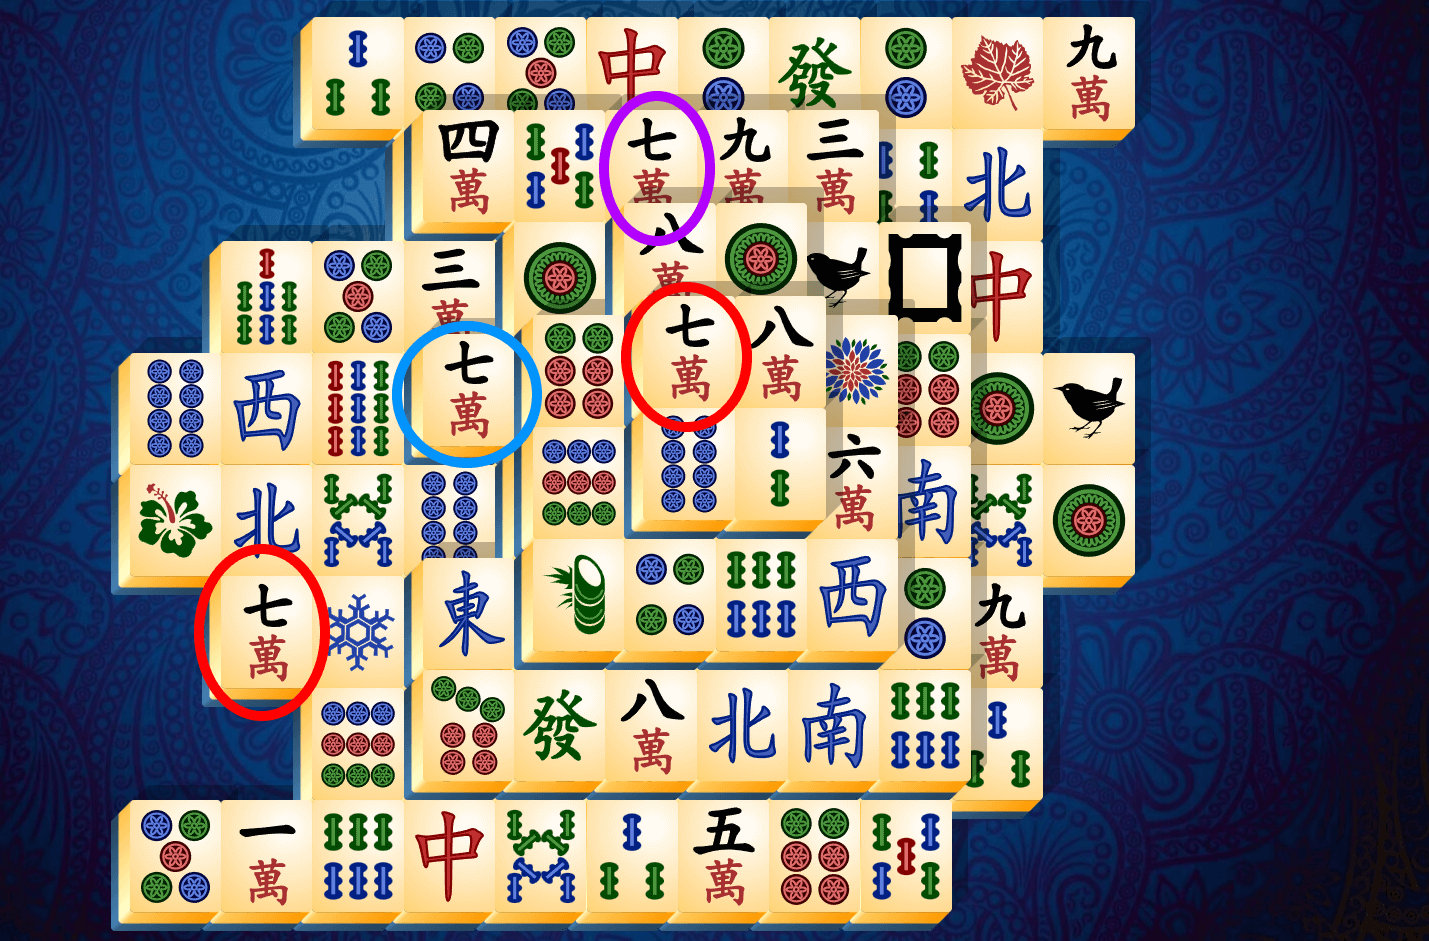 Tutorial de Mahjong Solitario, paso 9